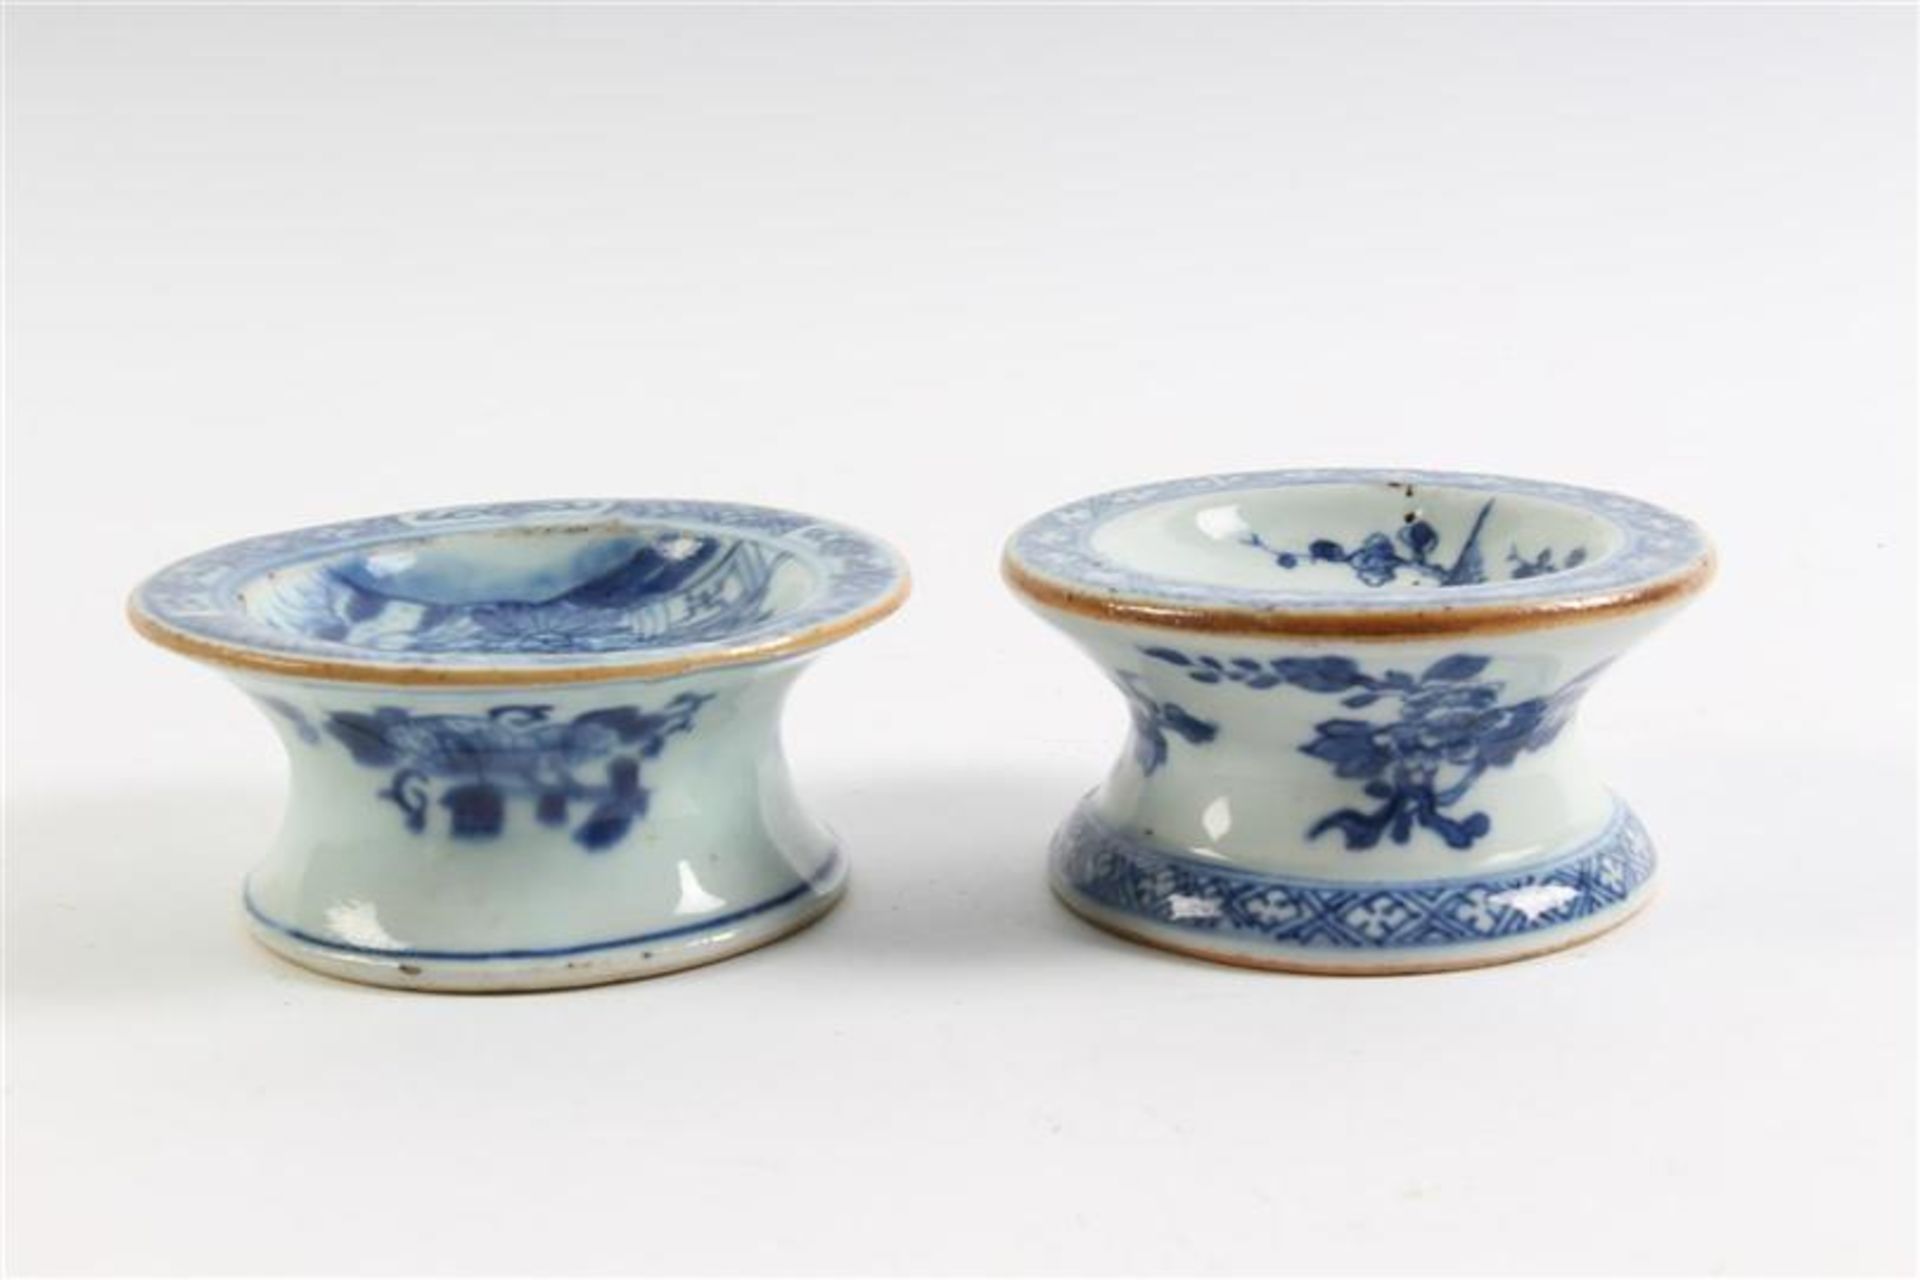 Twee porseleinen zoutvaten, China, 18e eeuw. HxD: 4 x 9.3 en 4.4 x 8.5 cm.